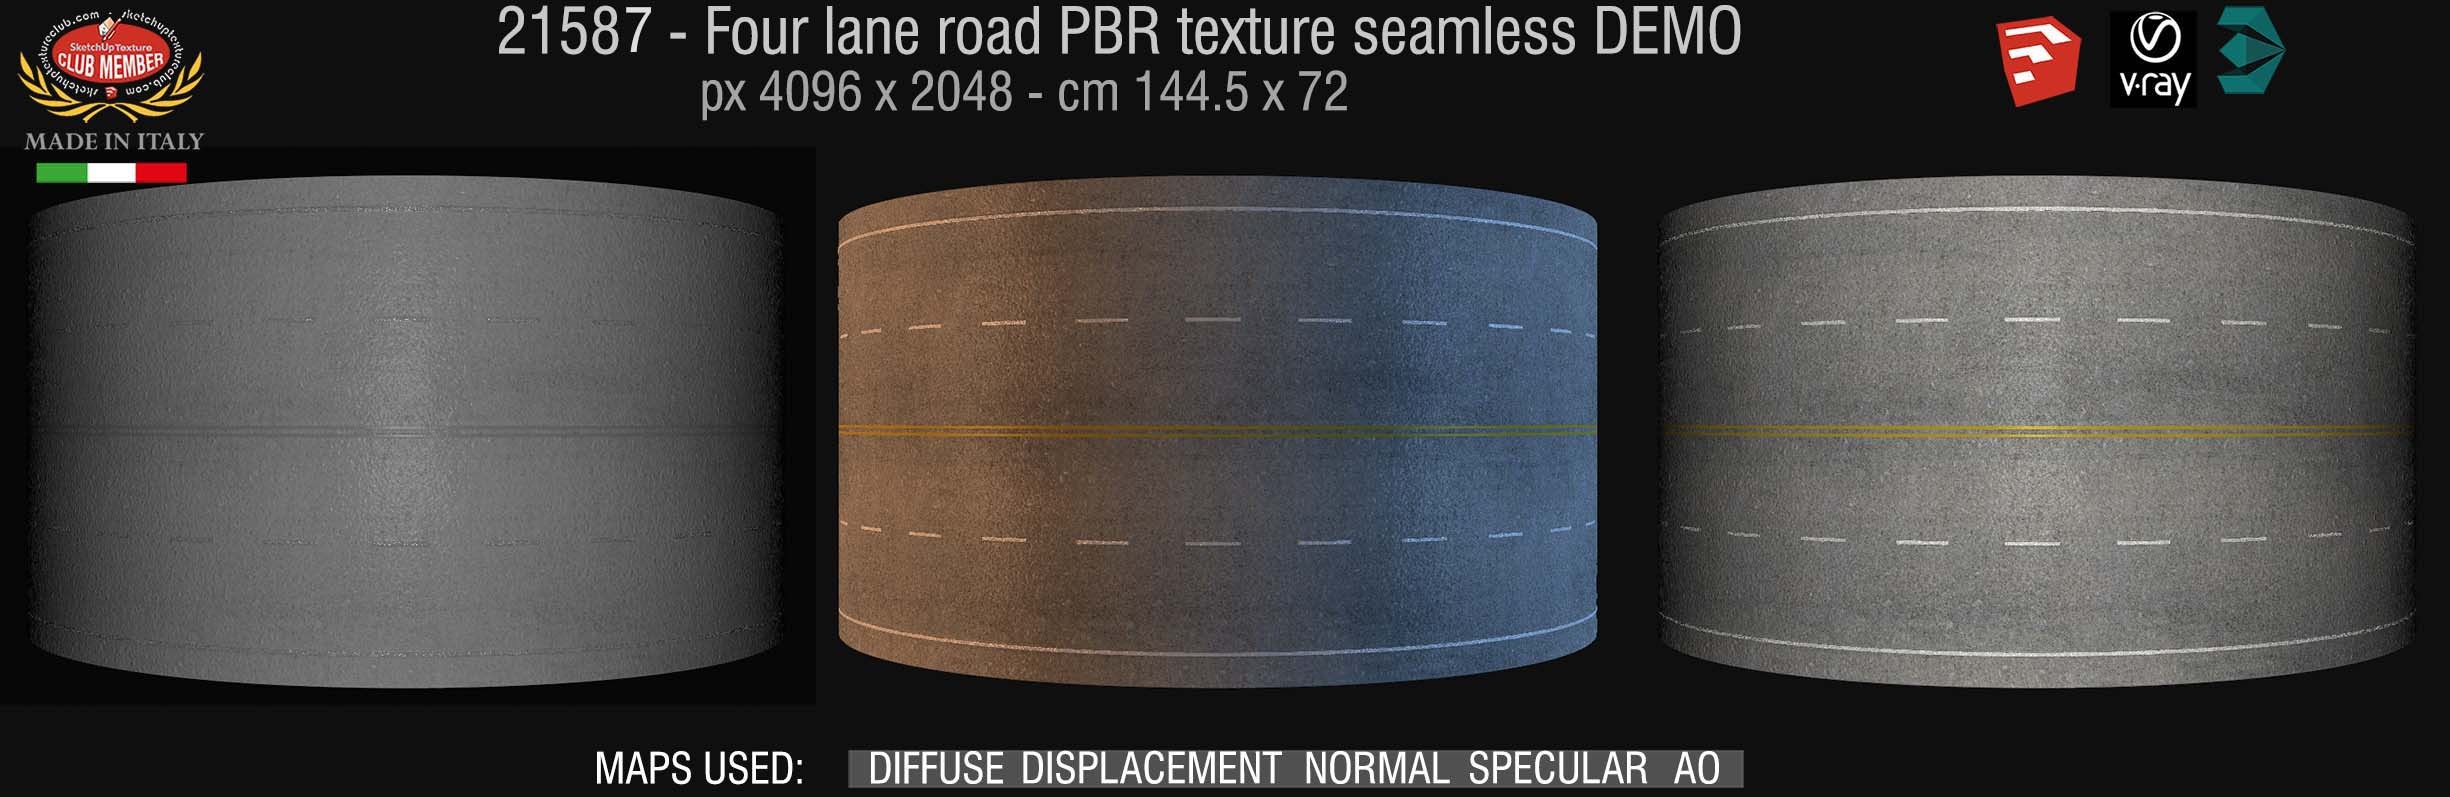 21587 Four lane road PBR texture seamless DEMO